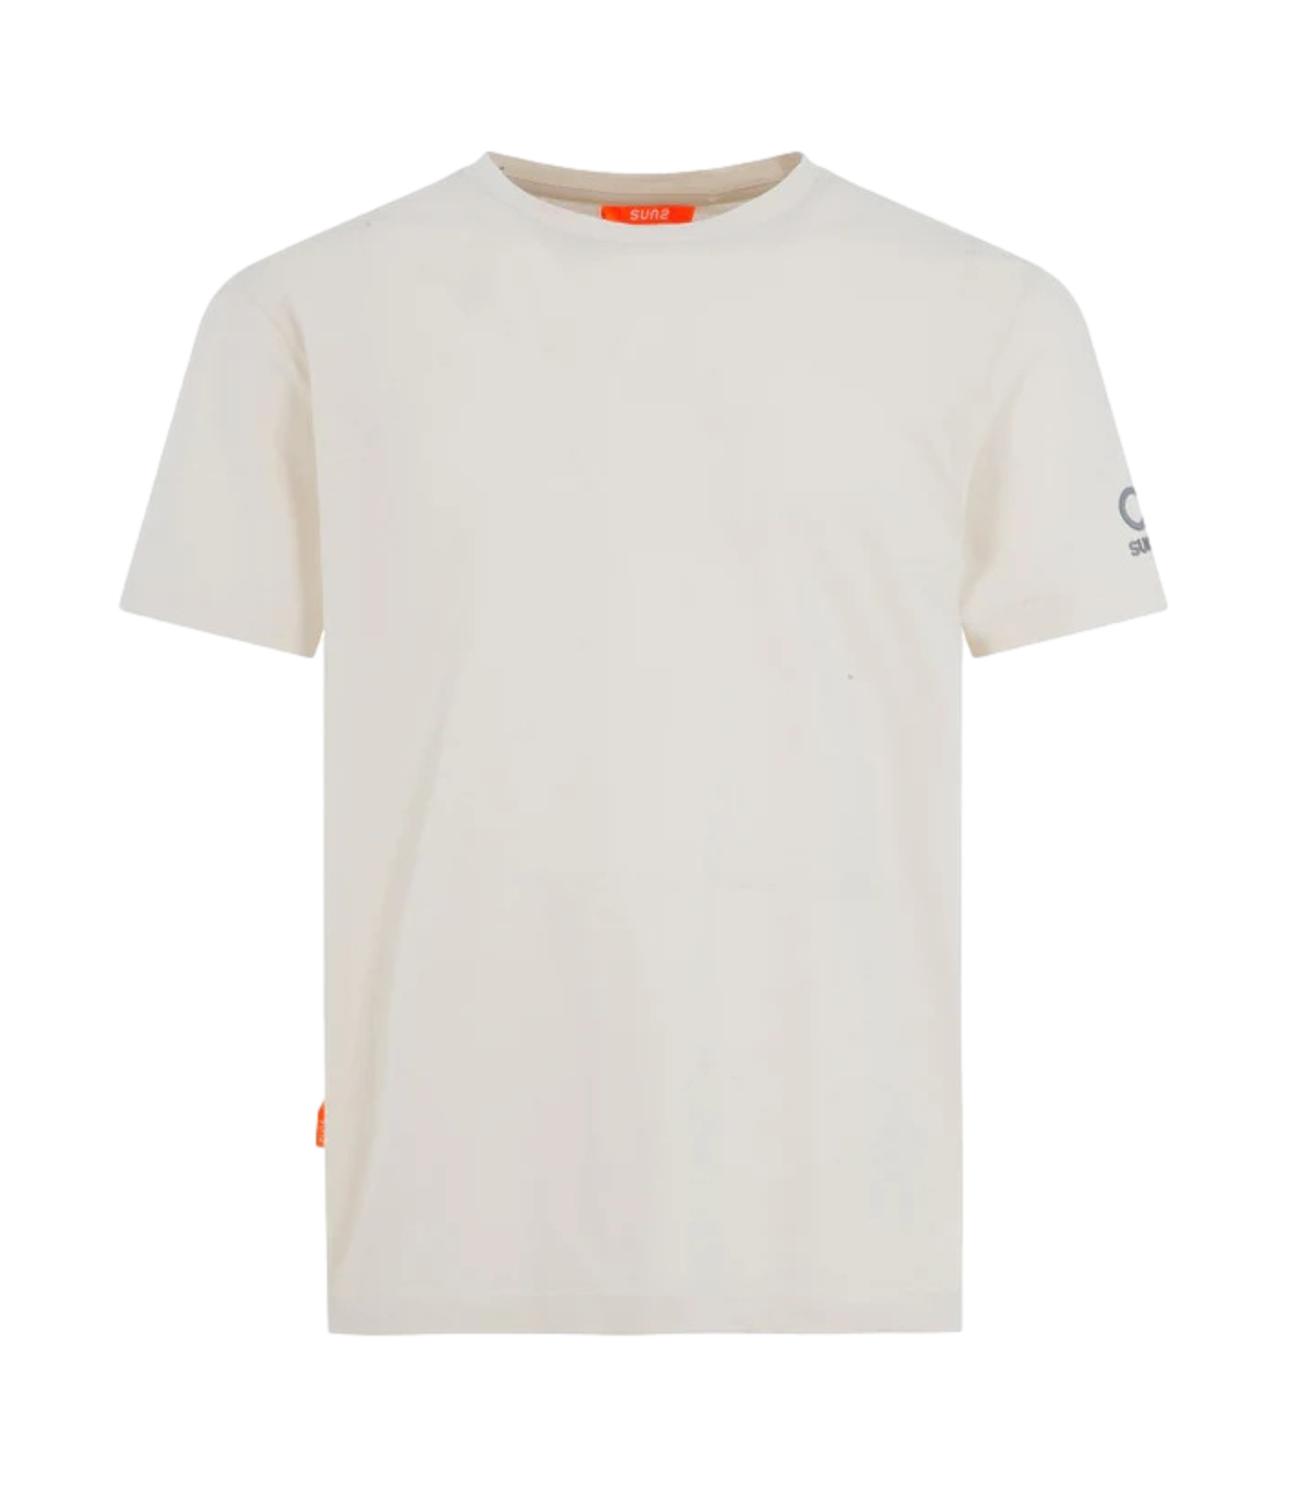 Men's crew-neck T-shirt in white cotton jersey